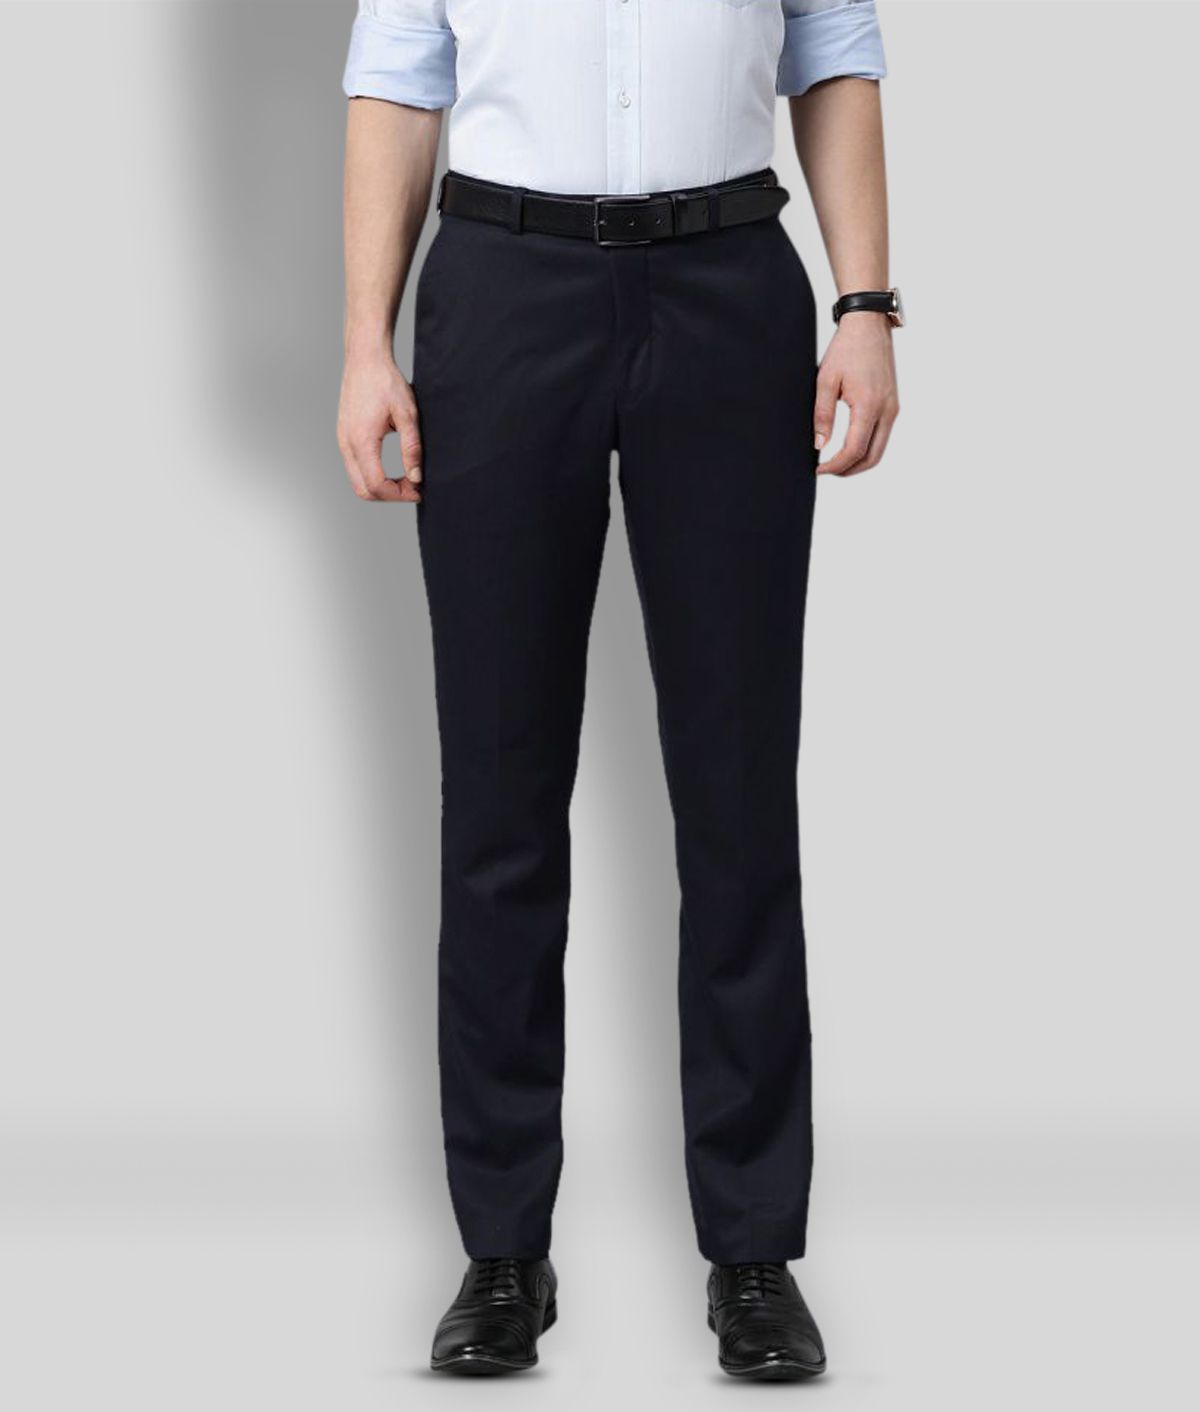     			Haul Chic - Navy Blue Polycotton Slim - Fit Men's Formal Pants ( Pack of 1 )